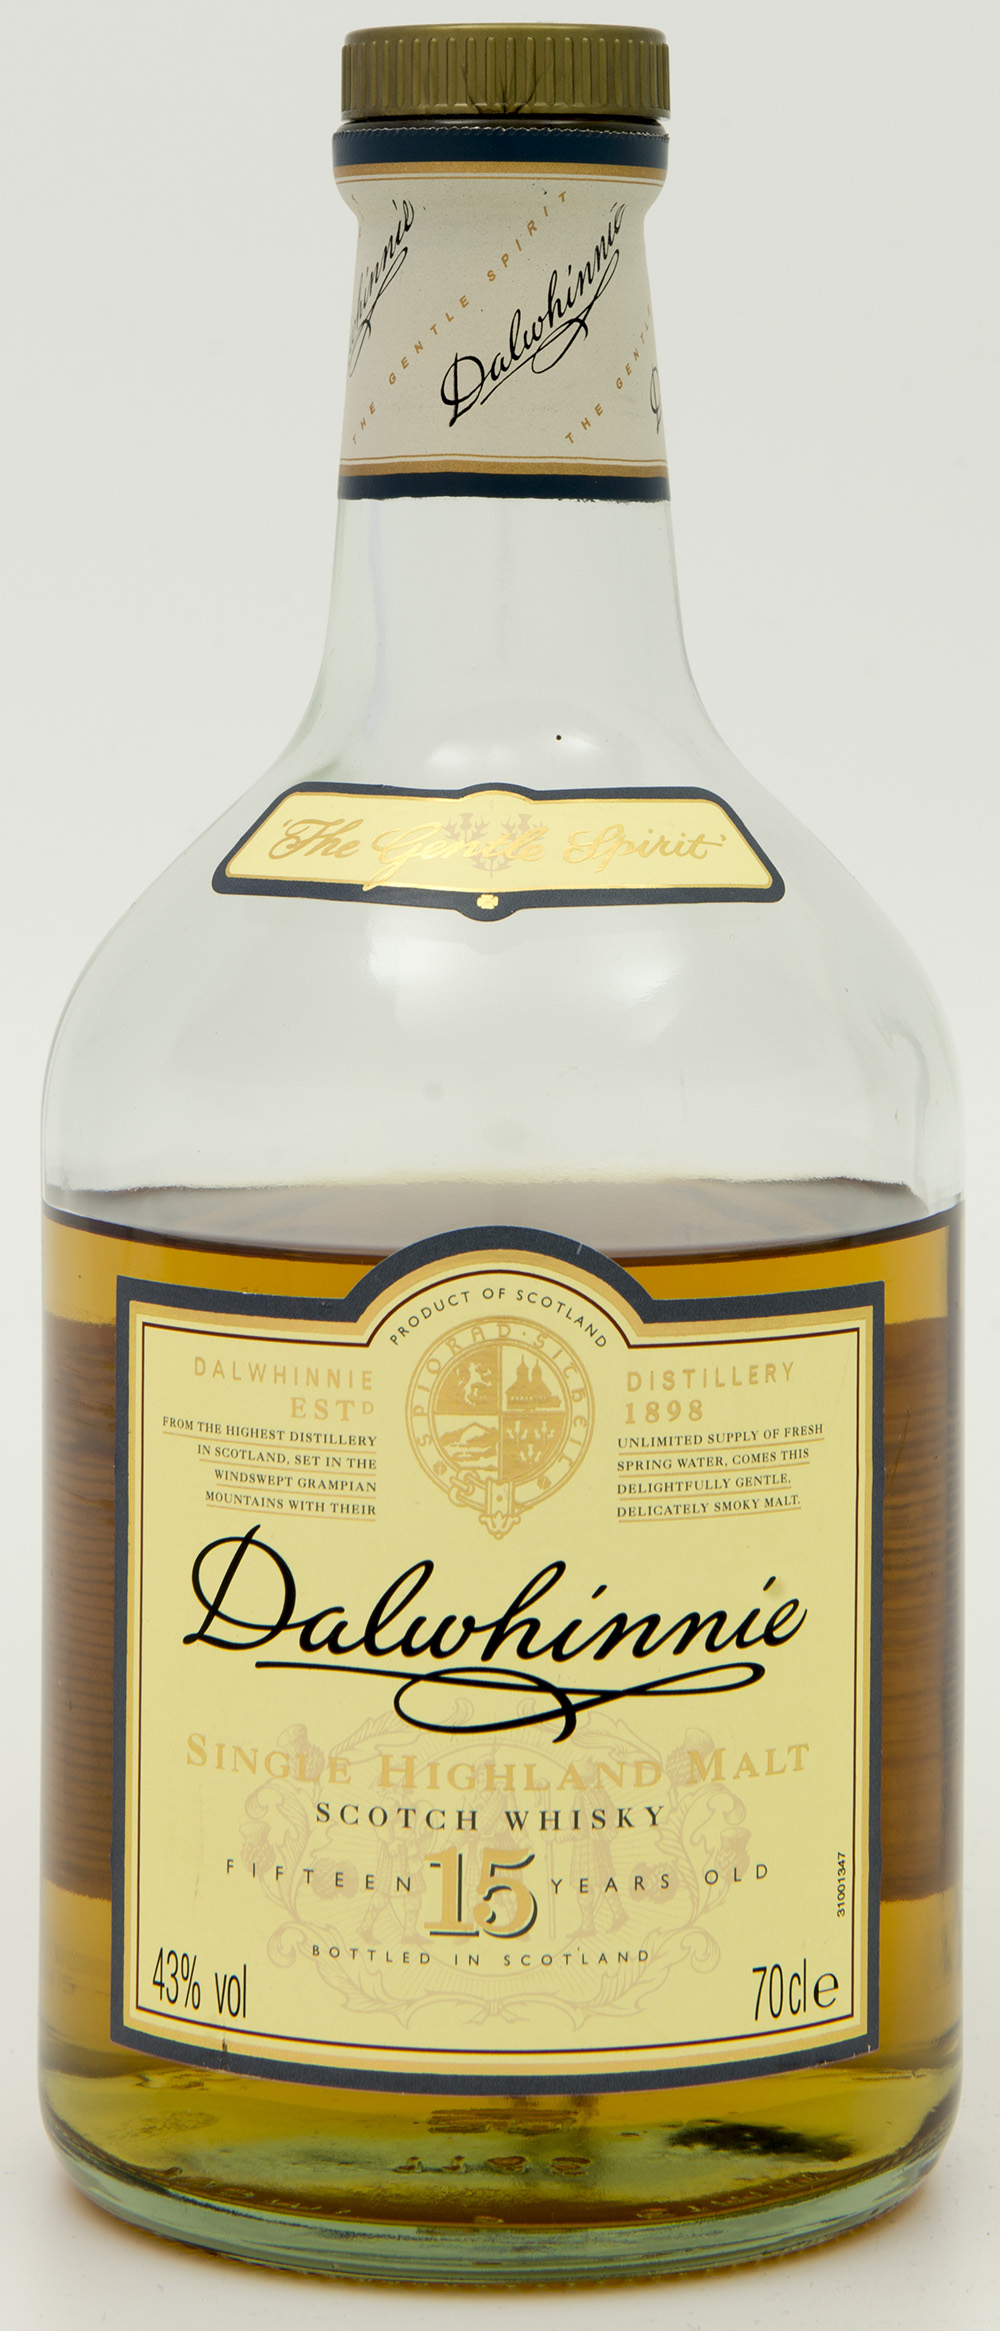 Billede: DSC_8169 - Dalwhinnie 15 - bottle front.jpg